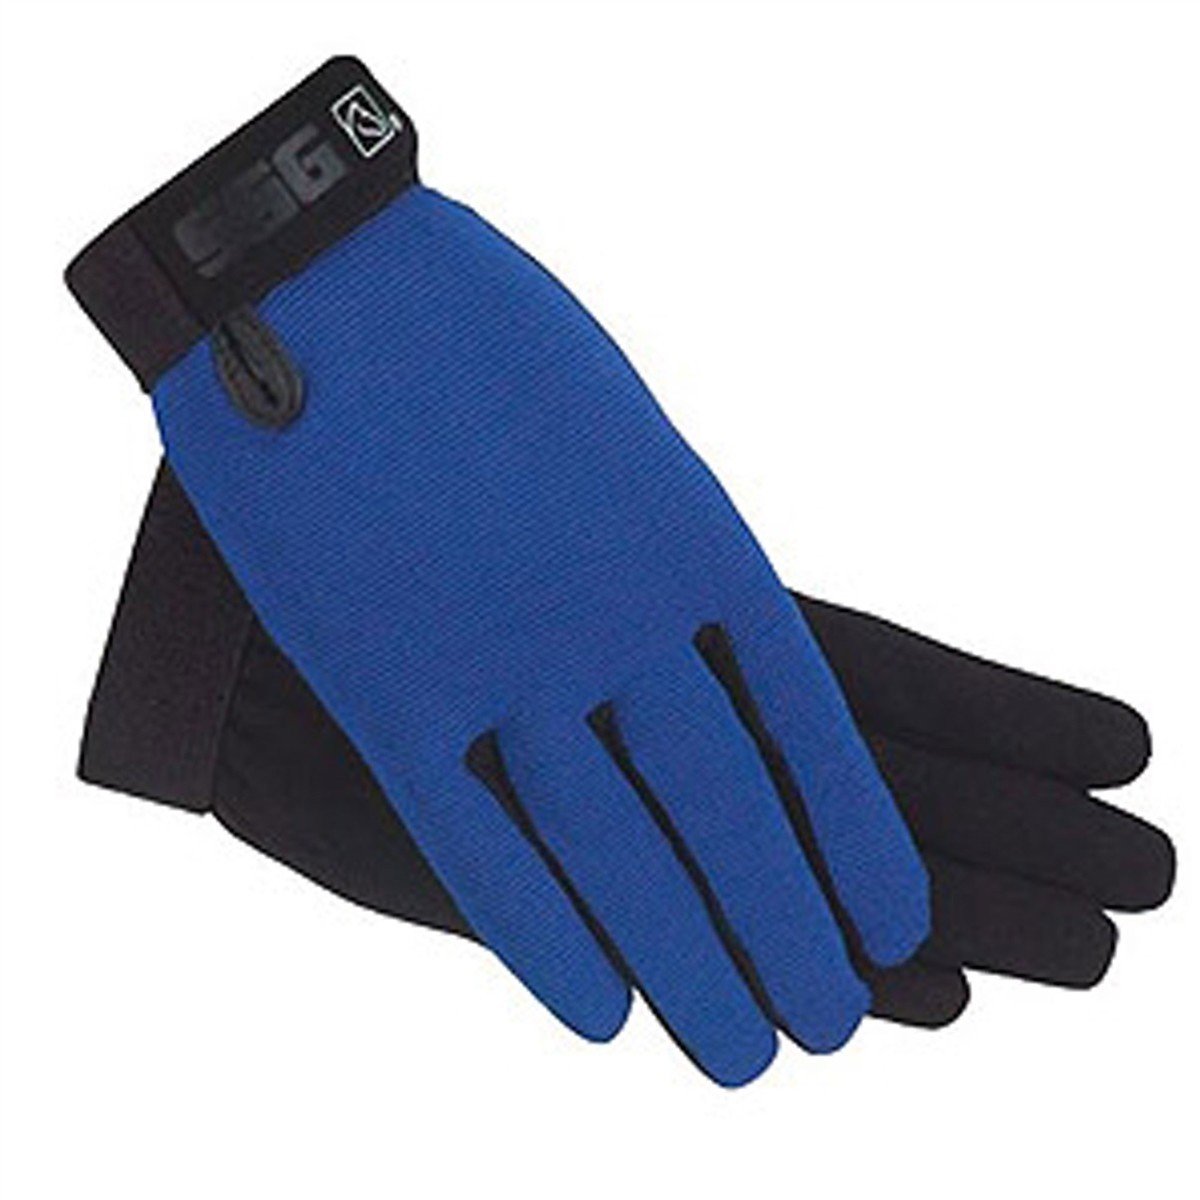 SSG Child All Weather Gloves